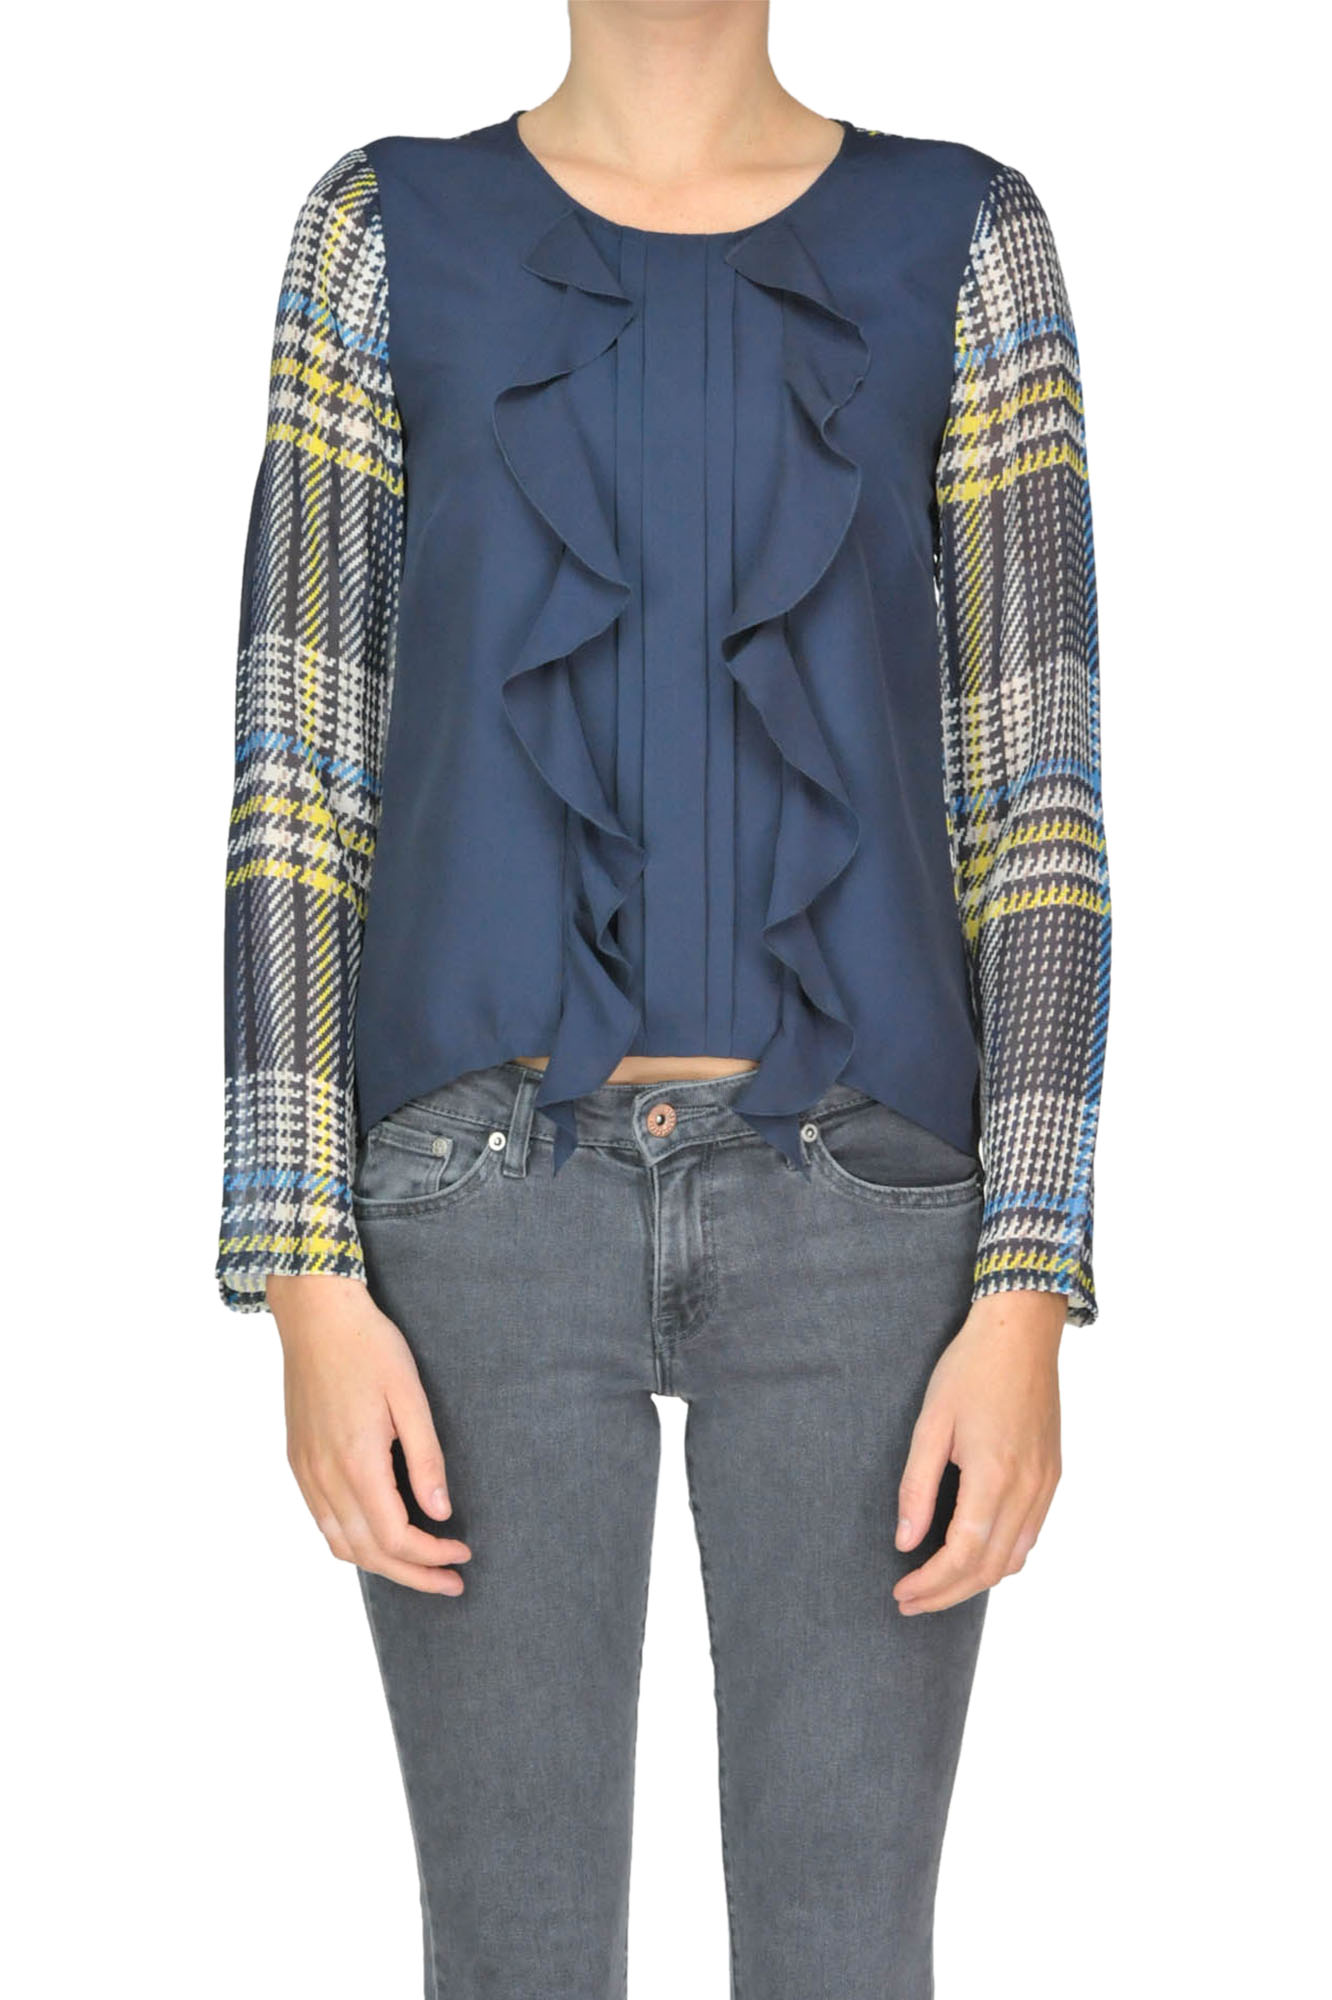 Patrizia Pepe Crepe blouse - Buy online on Glamest Fashion Outlet ...